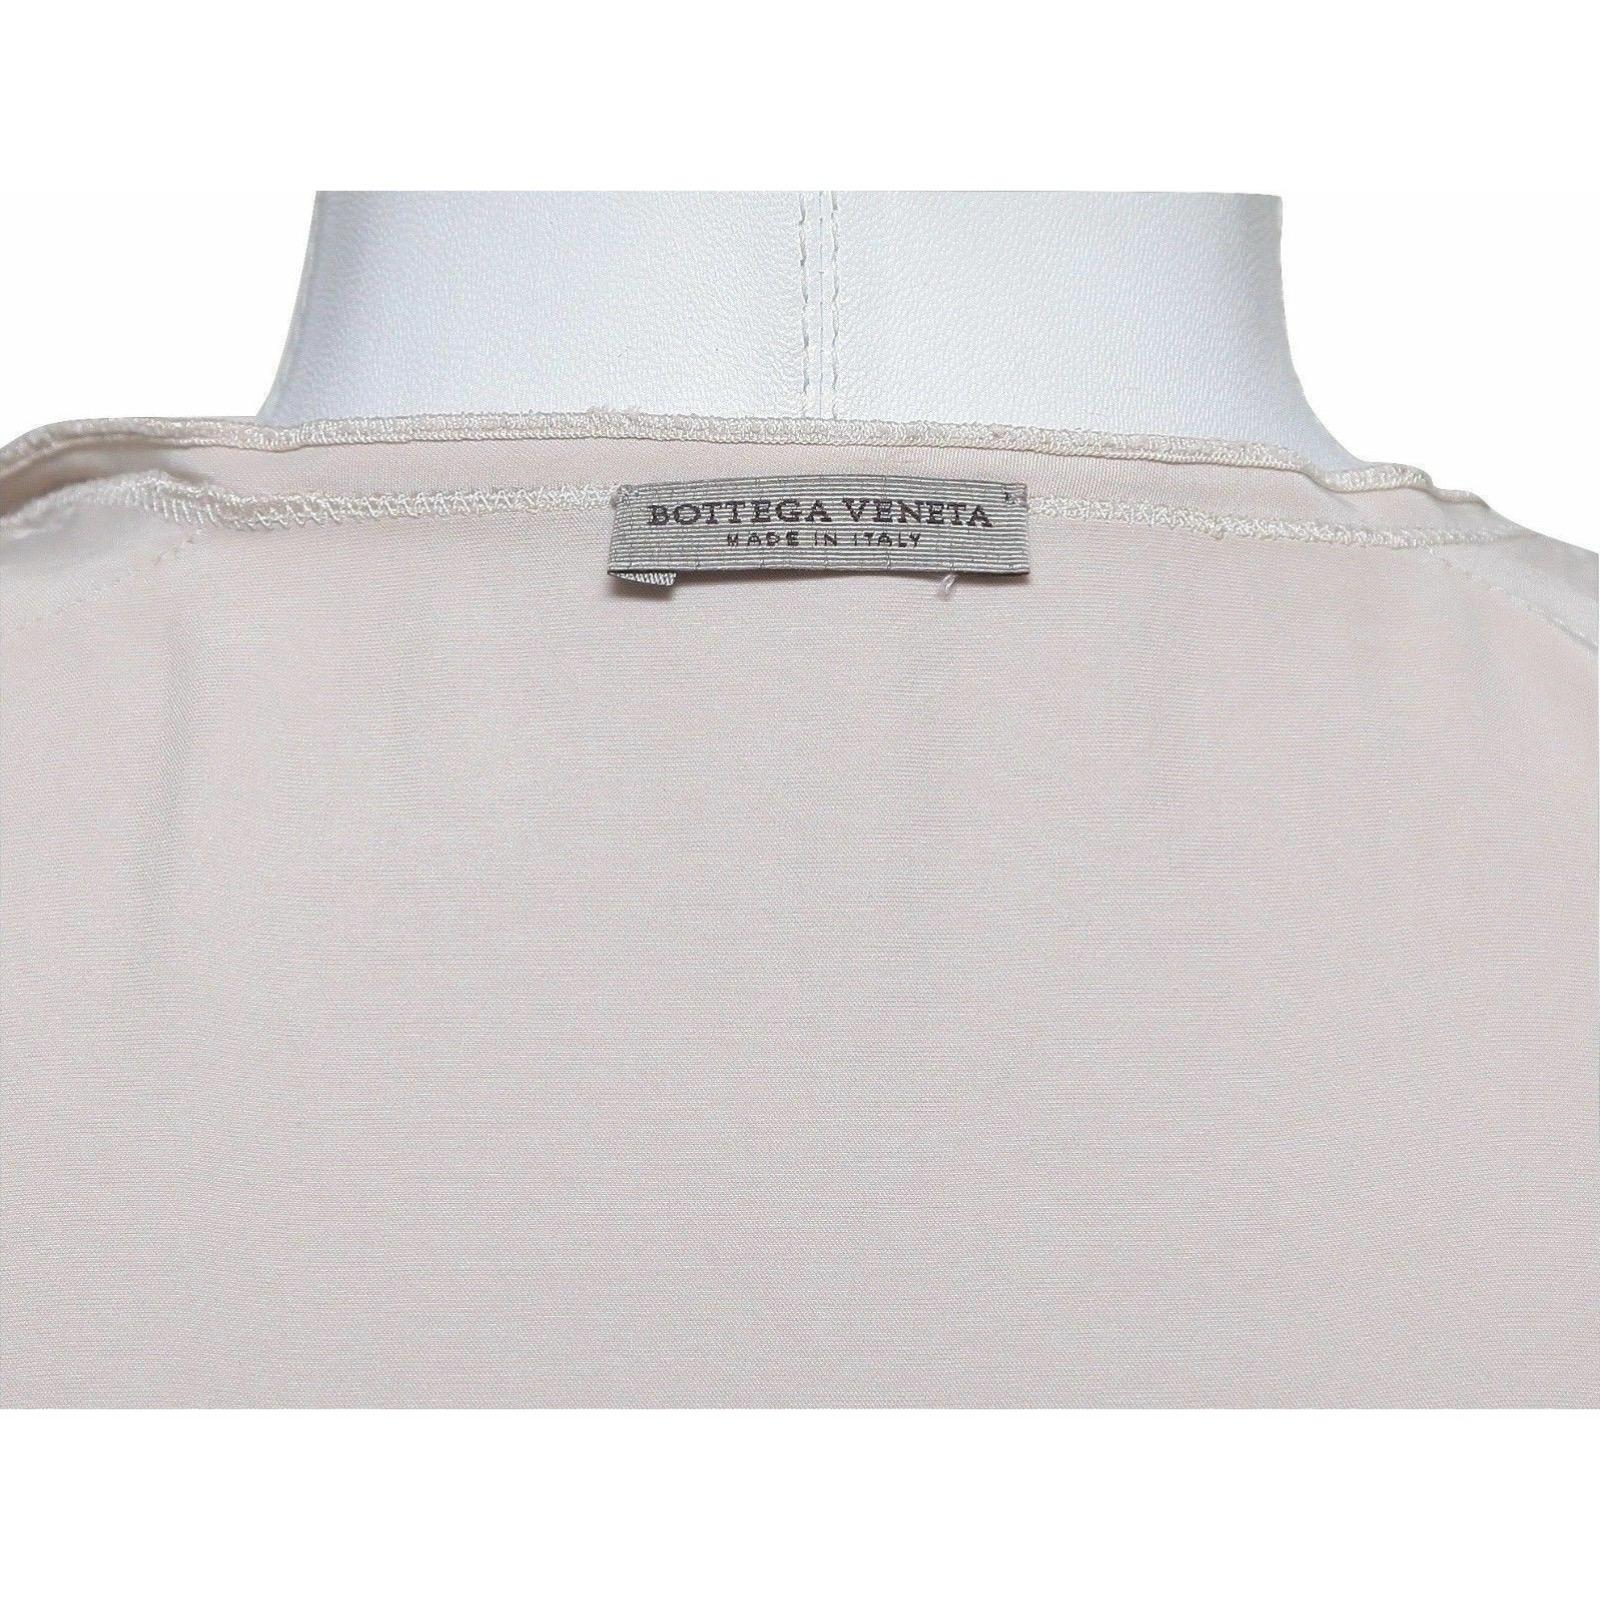 BOTTEGA VENETA Blouse Sleeveless Shirt Top White Blush Snap Front Sz 38 BNWT For Sale 2